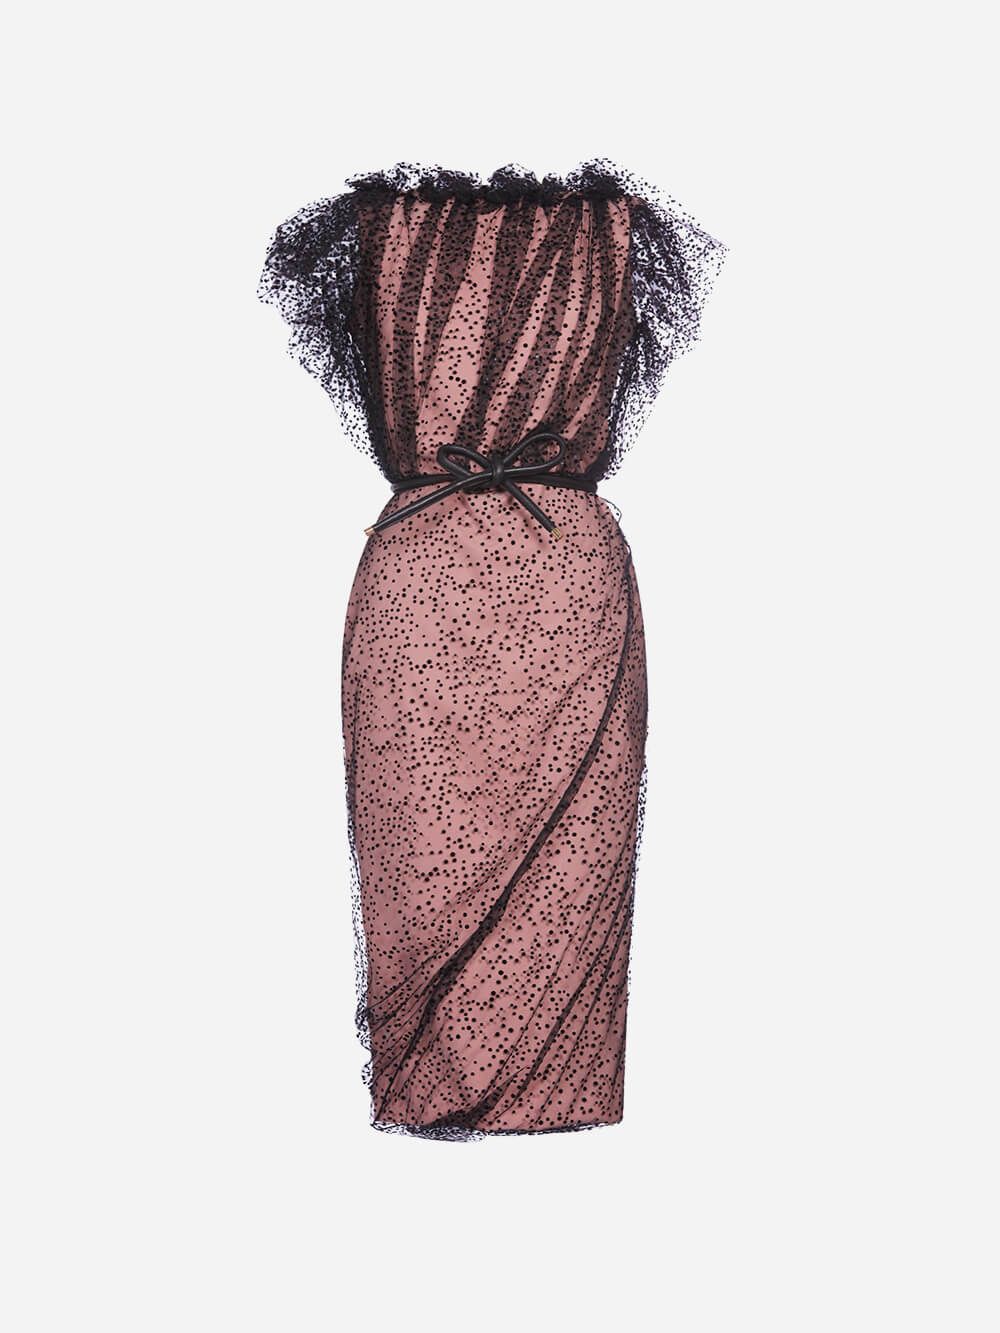 Nude Belted Dress | Diogo Miranda 